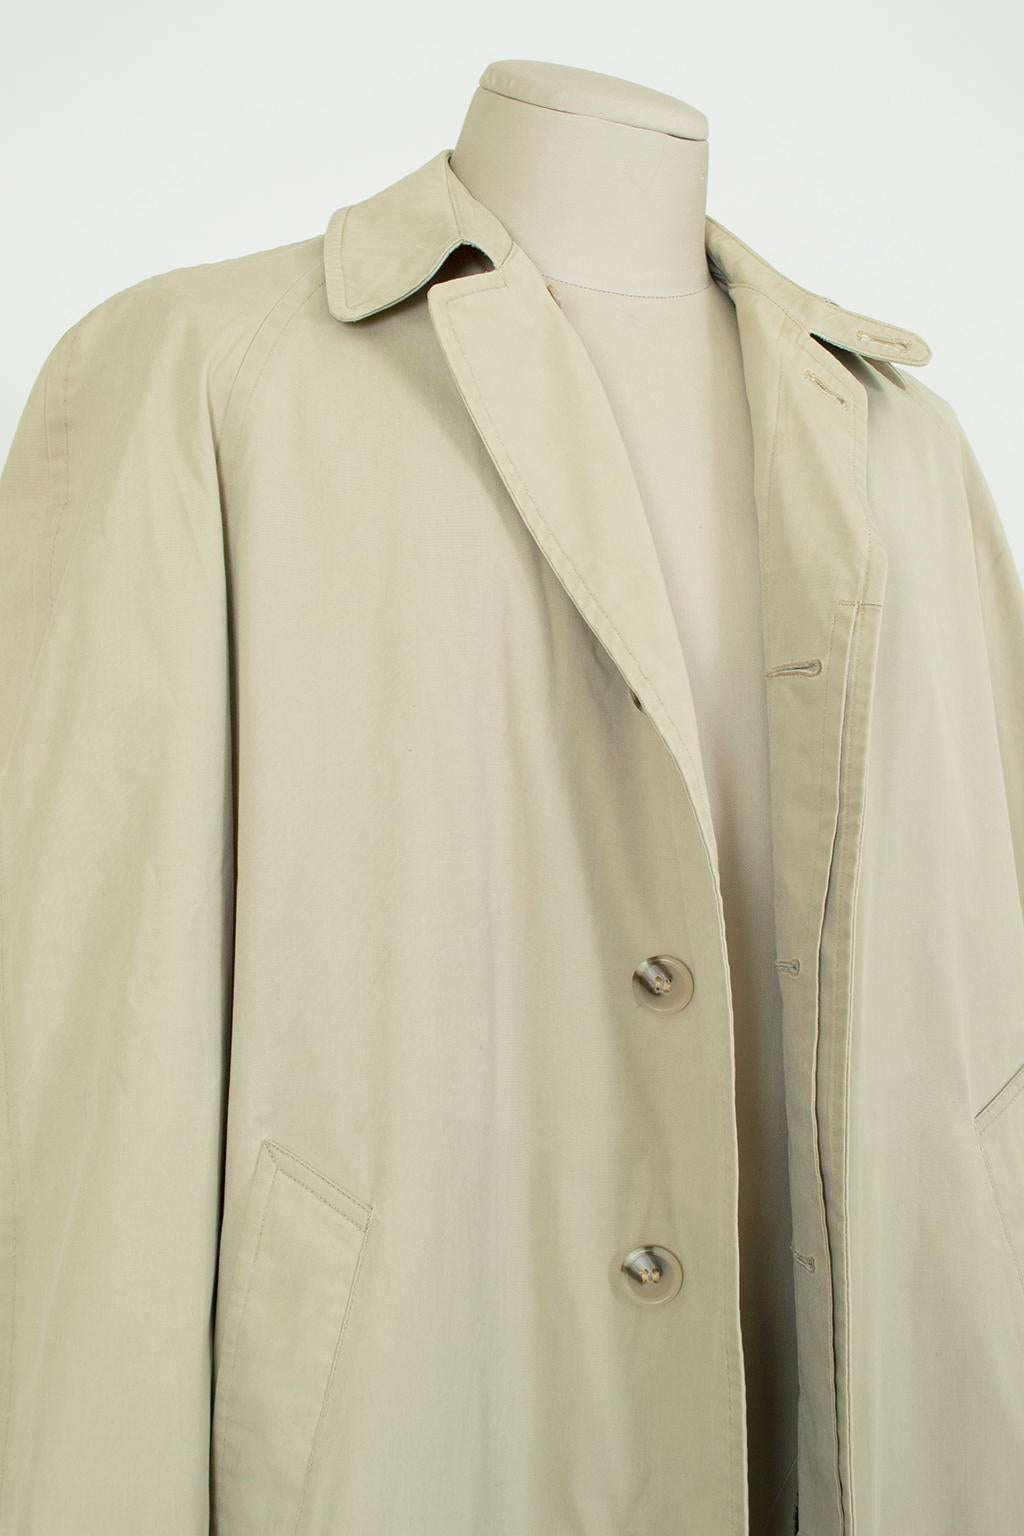 Men’s London Fog Khaki Trench Raincoat with Removable Alpaca Lining–40/42, 1950s 2